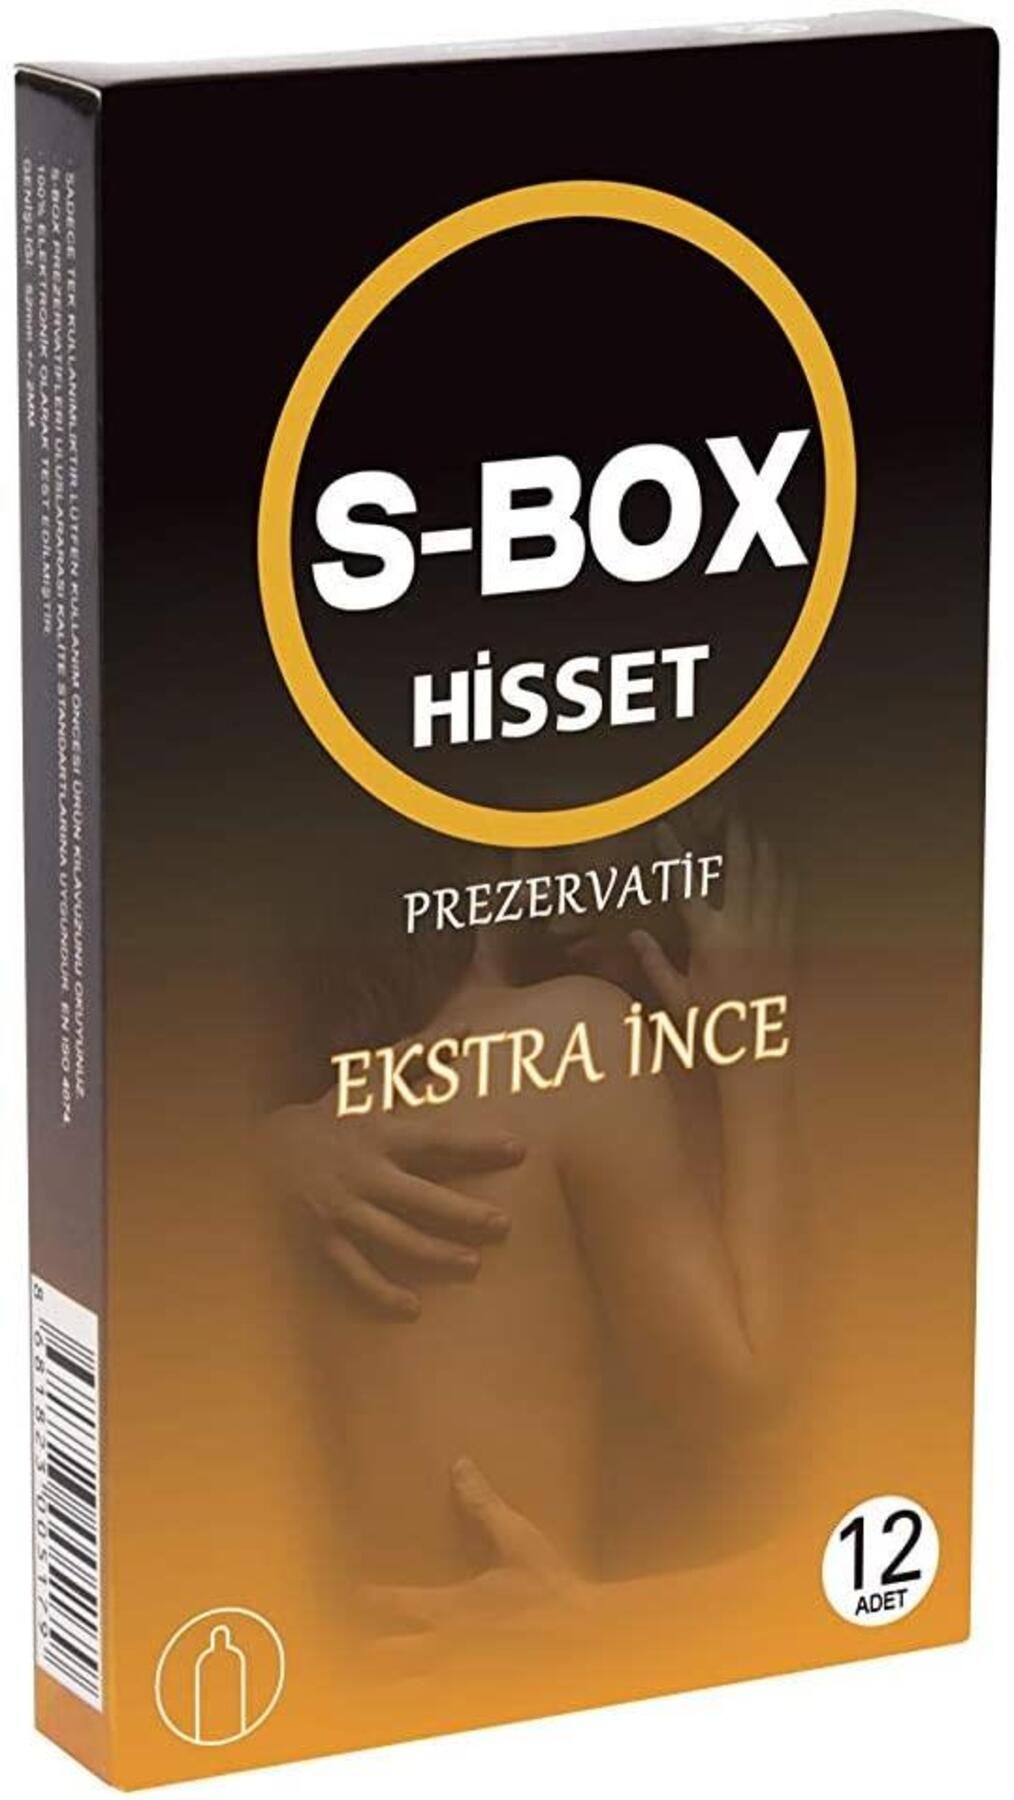 S-Box S Box 12 Li Prezervatif Ekstra Ince Hisset